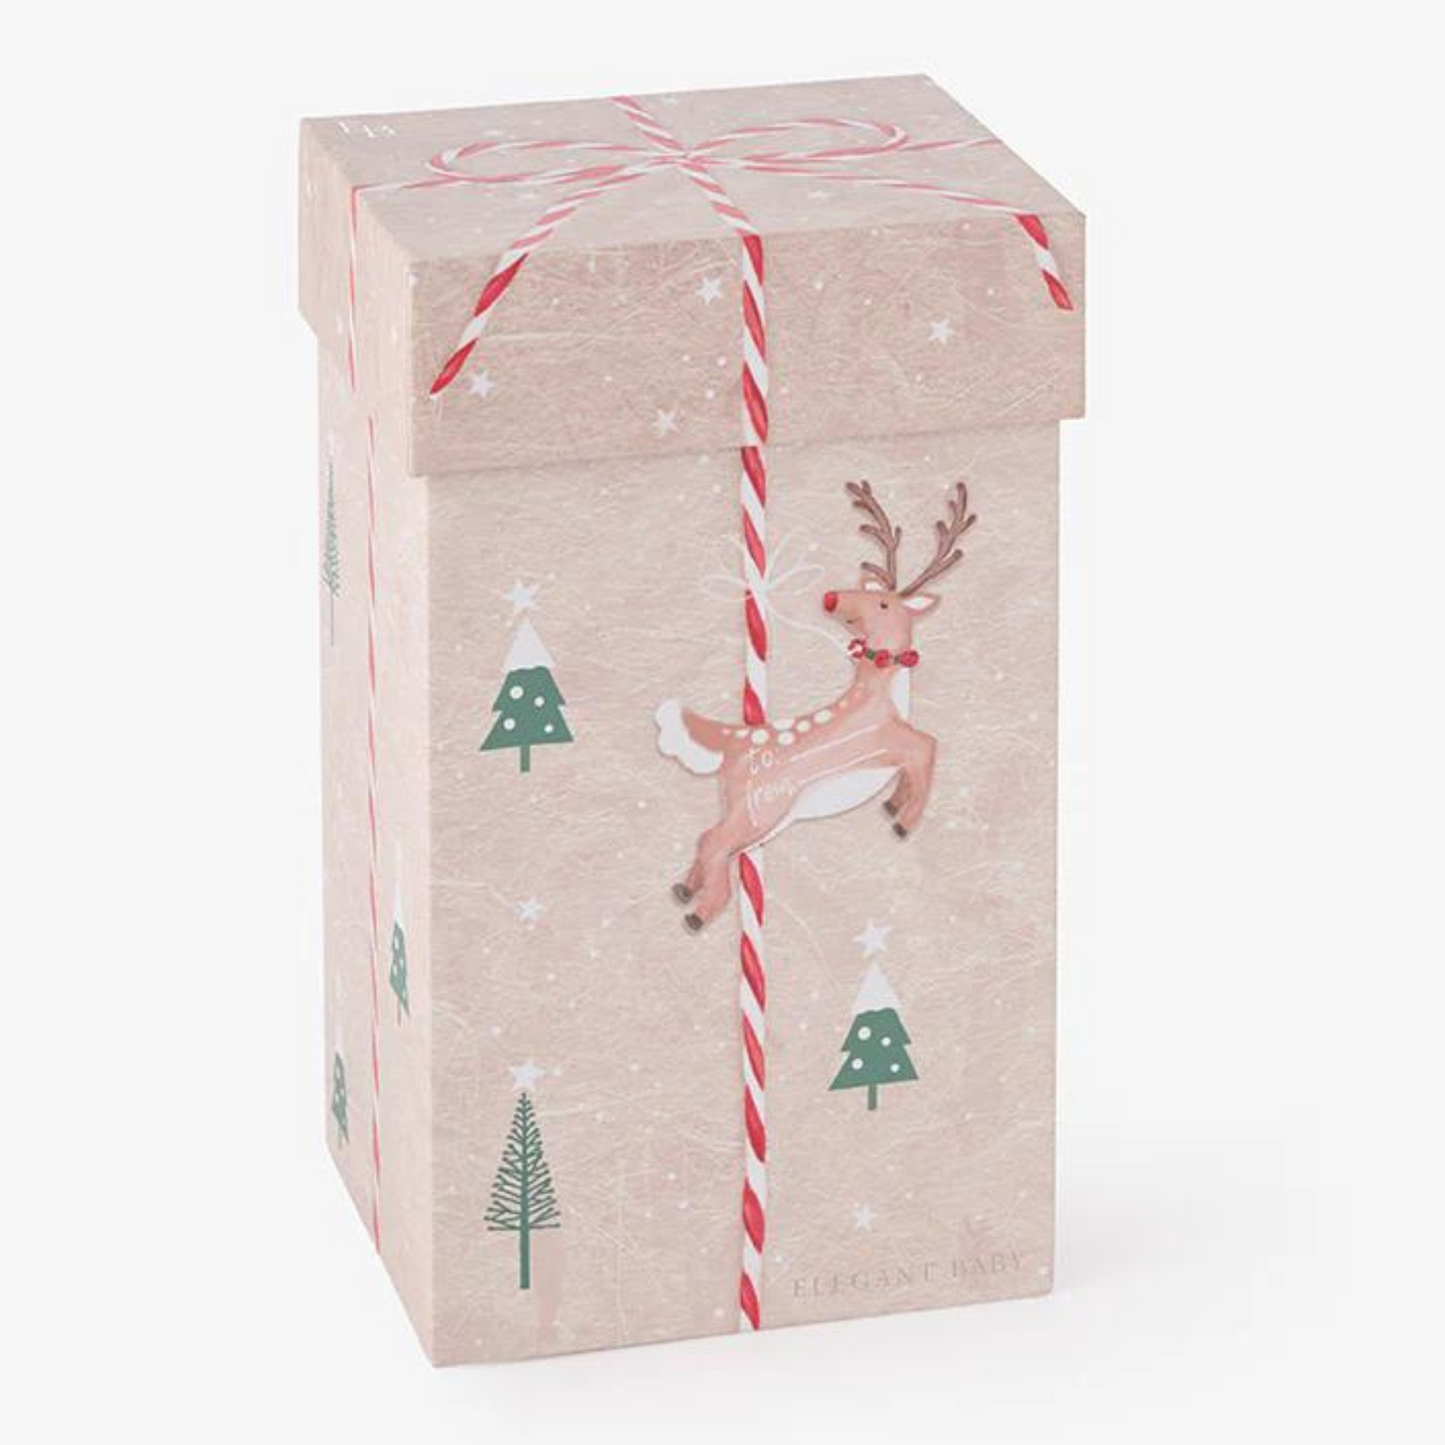 Tinsel Reindeer Snuggler in Gift Box